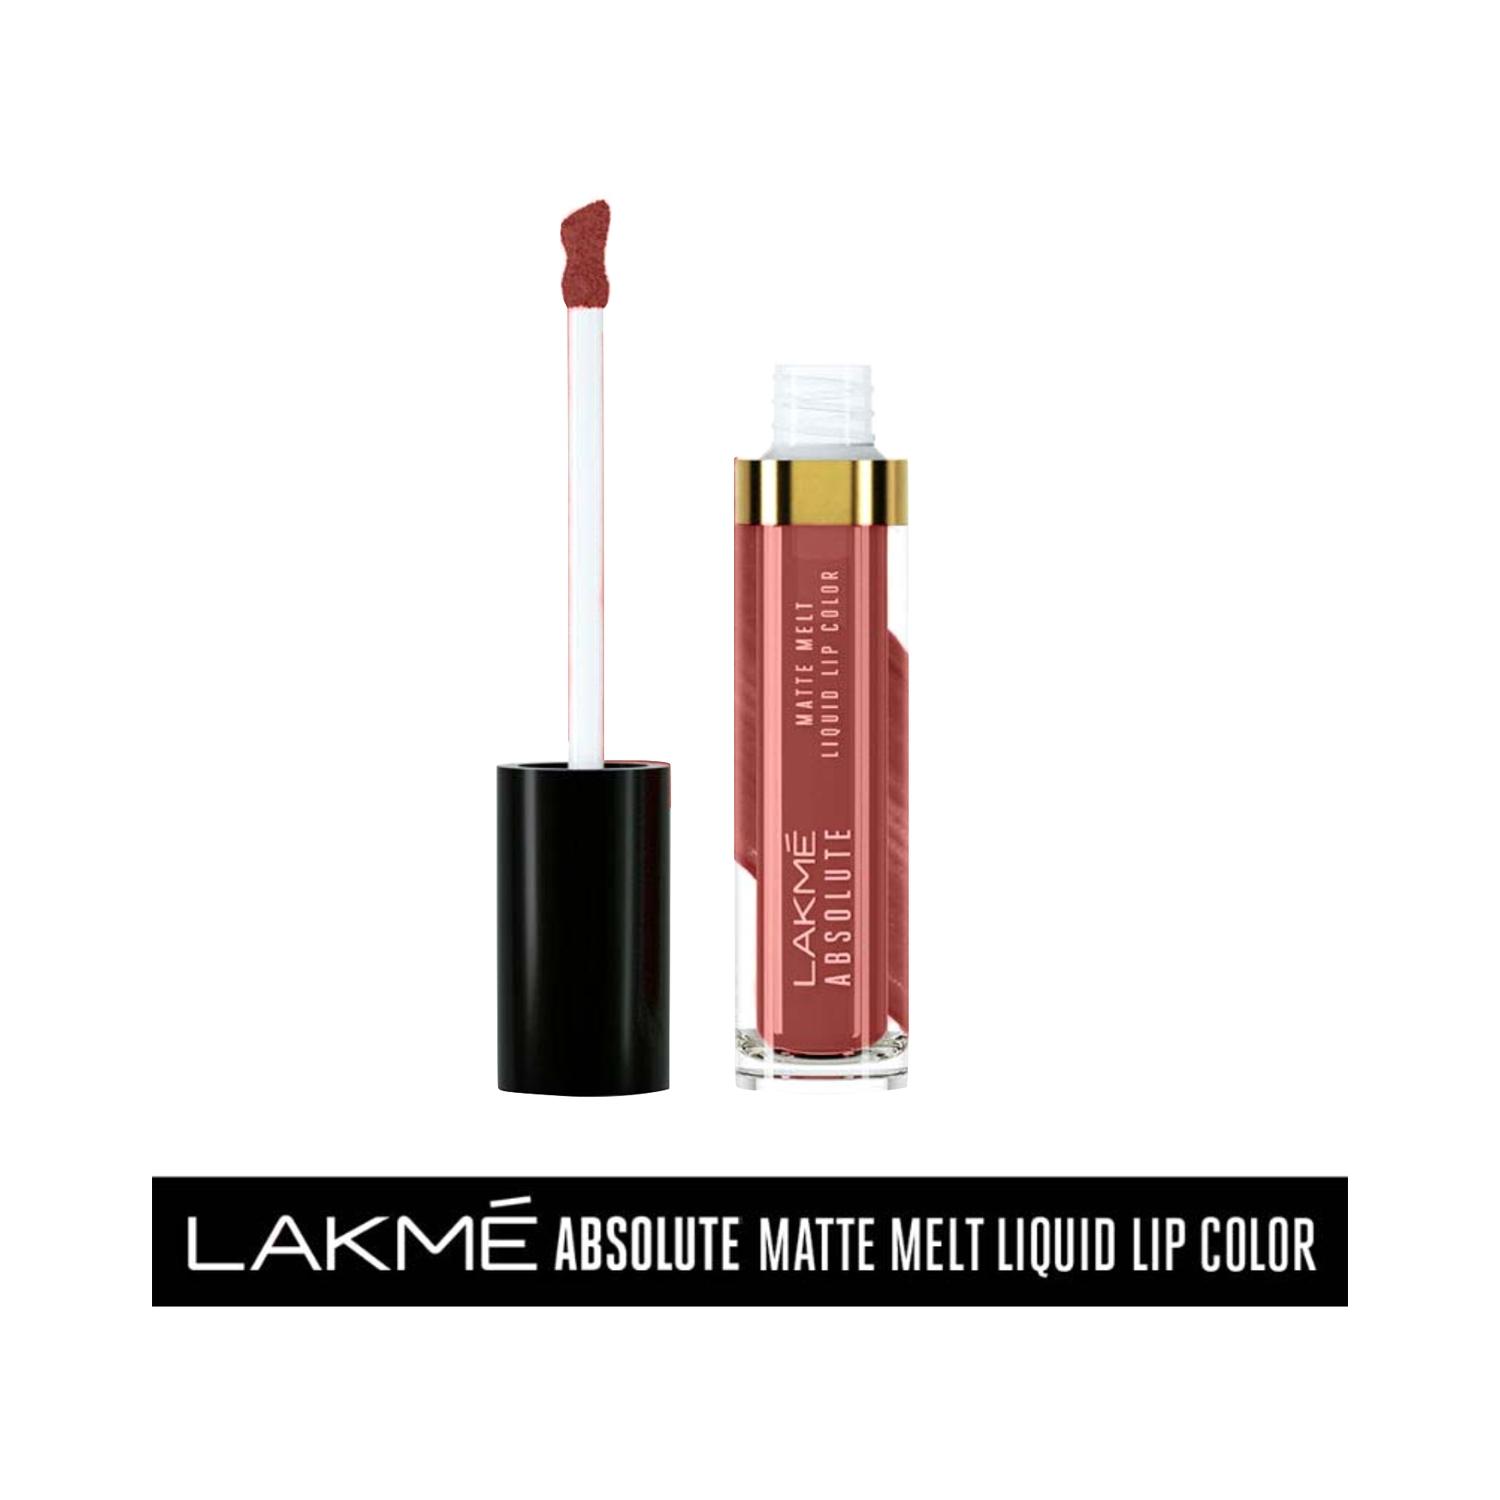 Lakme Absolute Matte Melt Liquid Lip Color - Brown Tan (6ml)